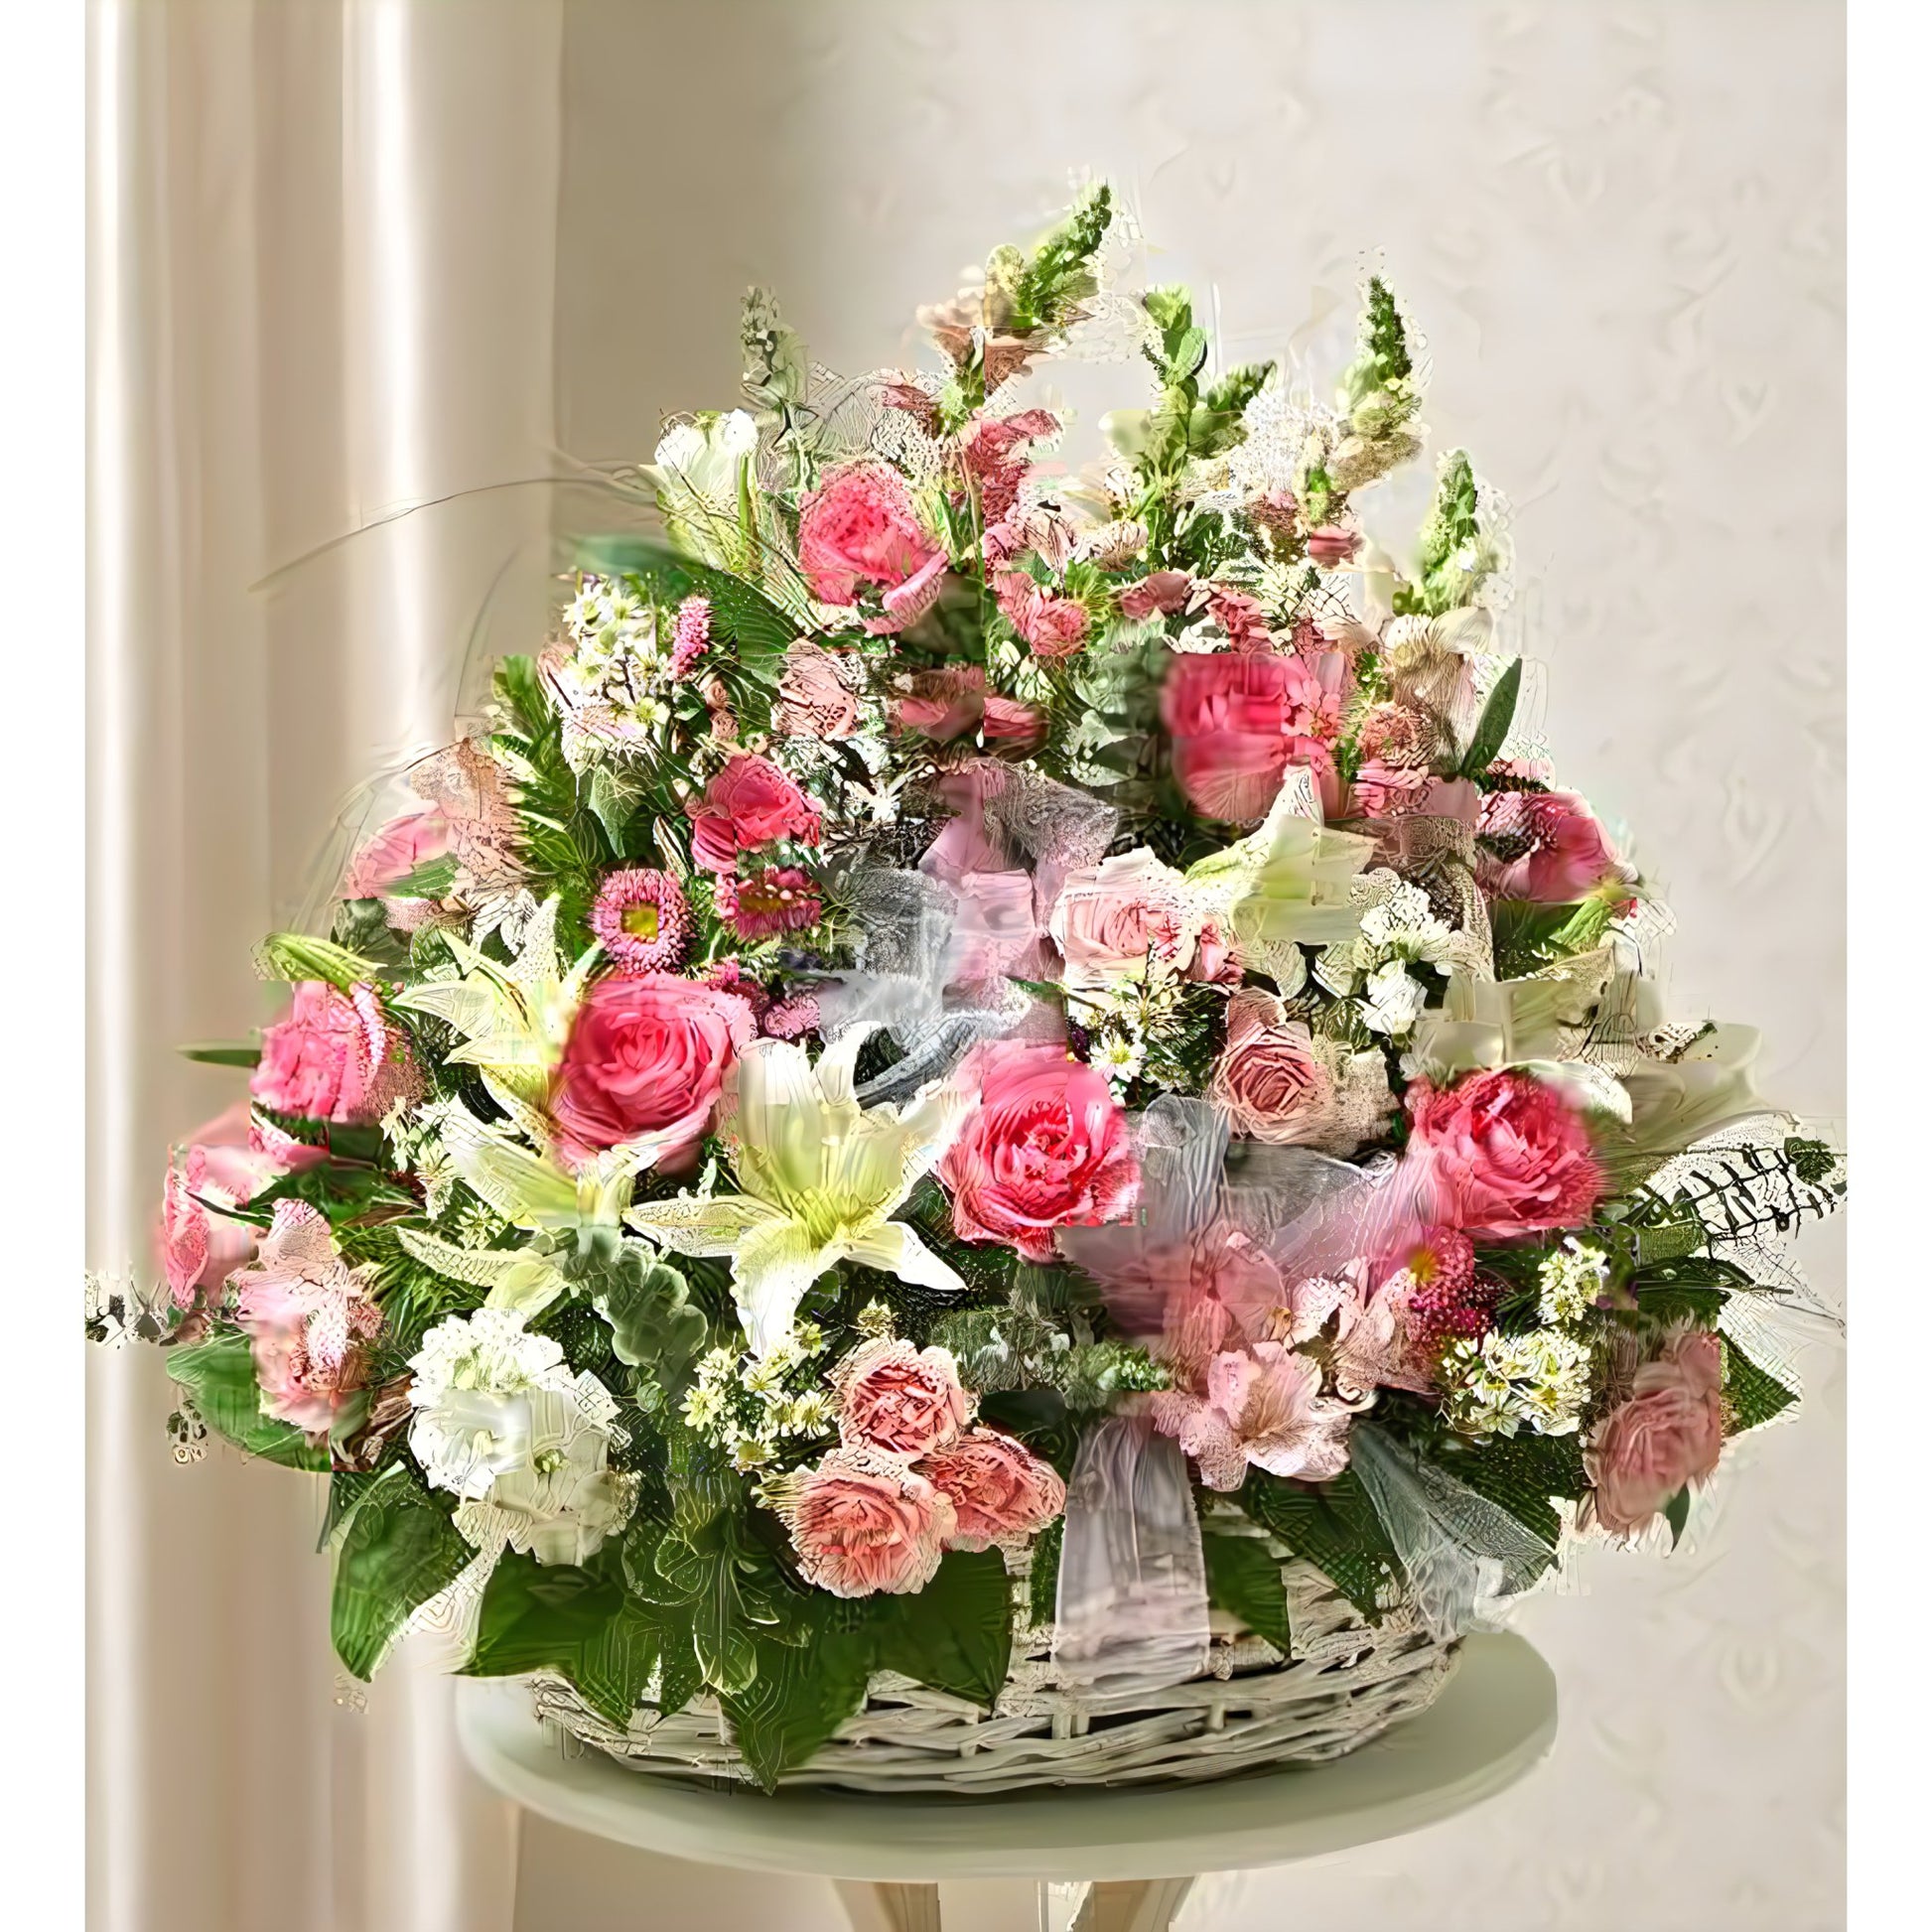 Pink and White Sympathy Arrangement in Basket - Floral_Arrangement - Flower Delivery NYC